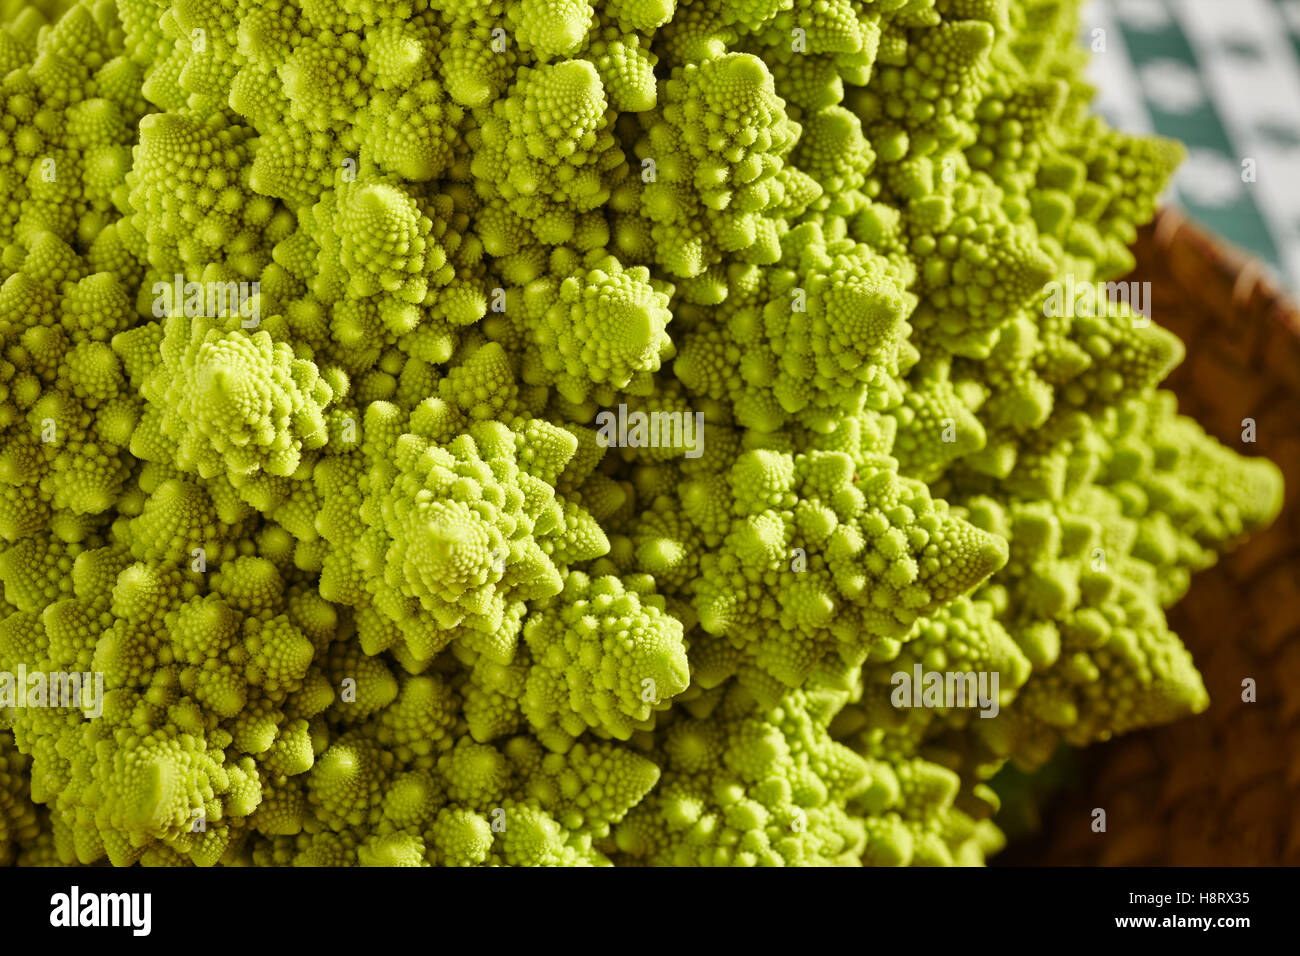 A whole raw romanesco broccoli Stock Photo